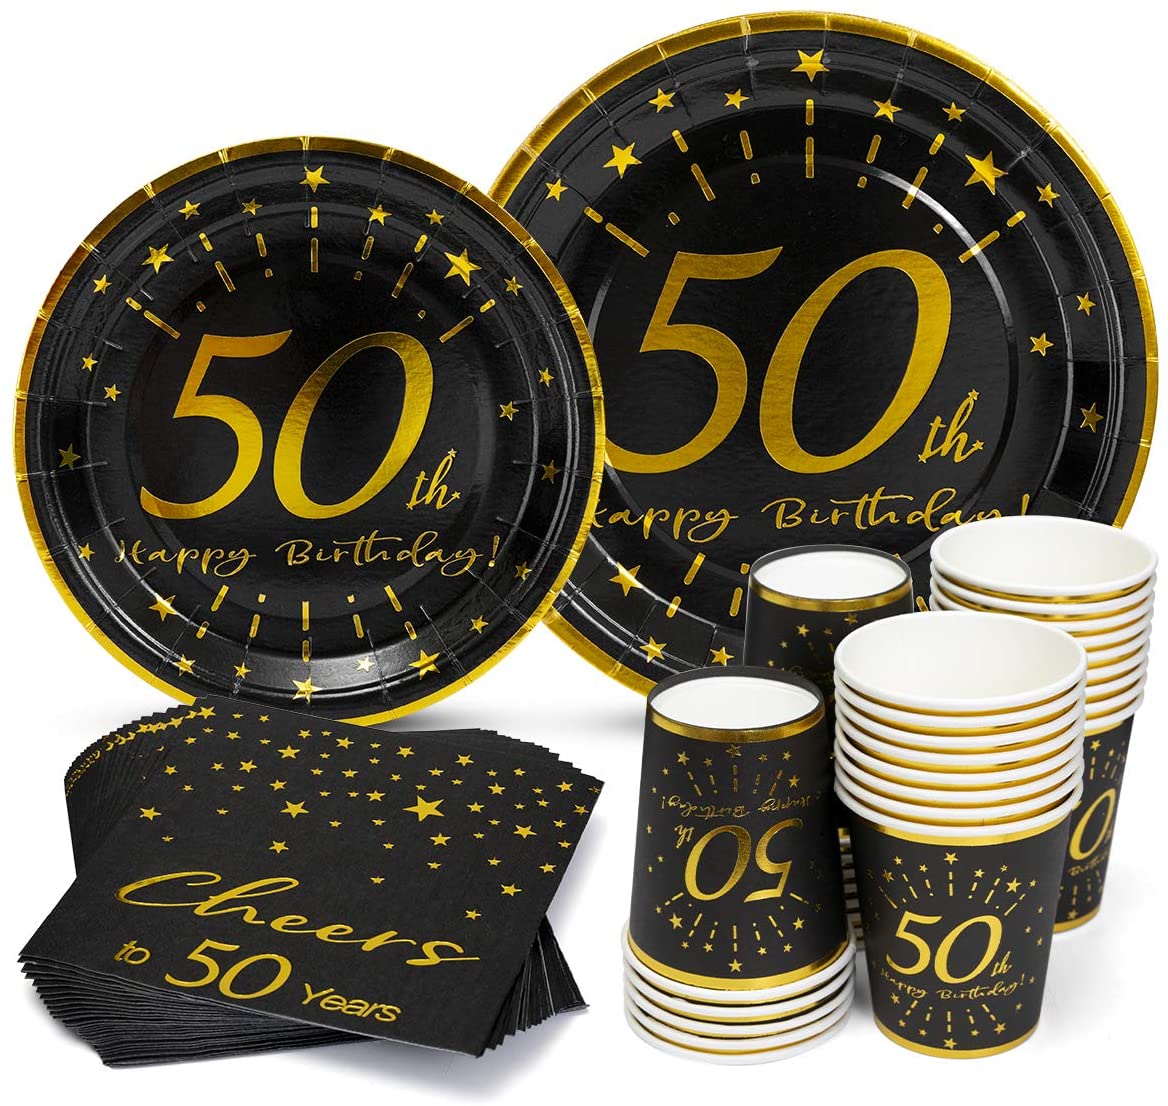 50th birthday tableware